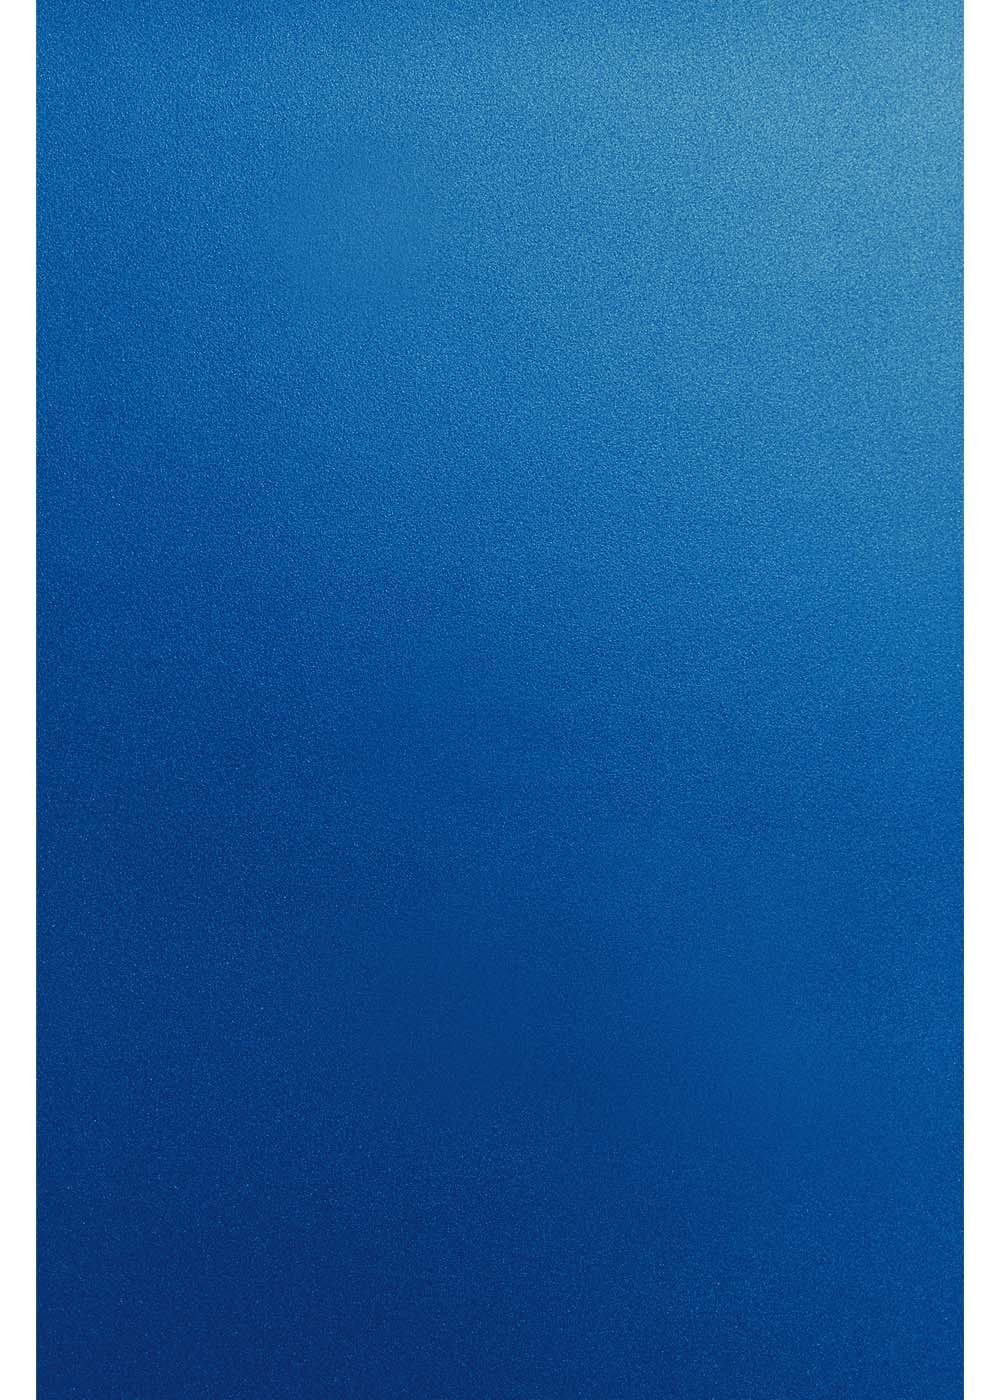 Hilltop Transparentpapier Reflektierende Transferfolie, Textilfolie, mehrfarbig, 30x20 cm Royalblau